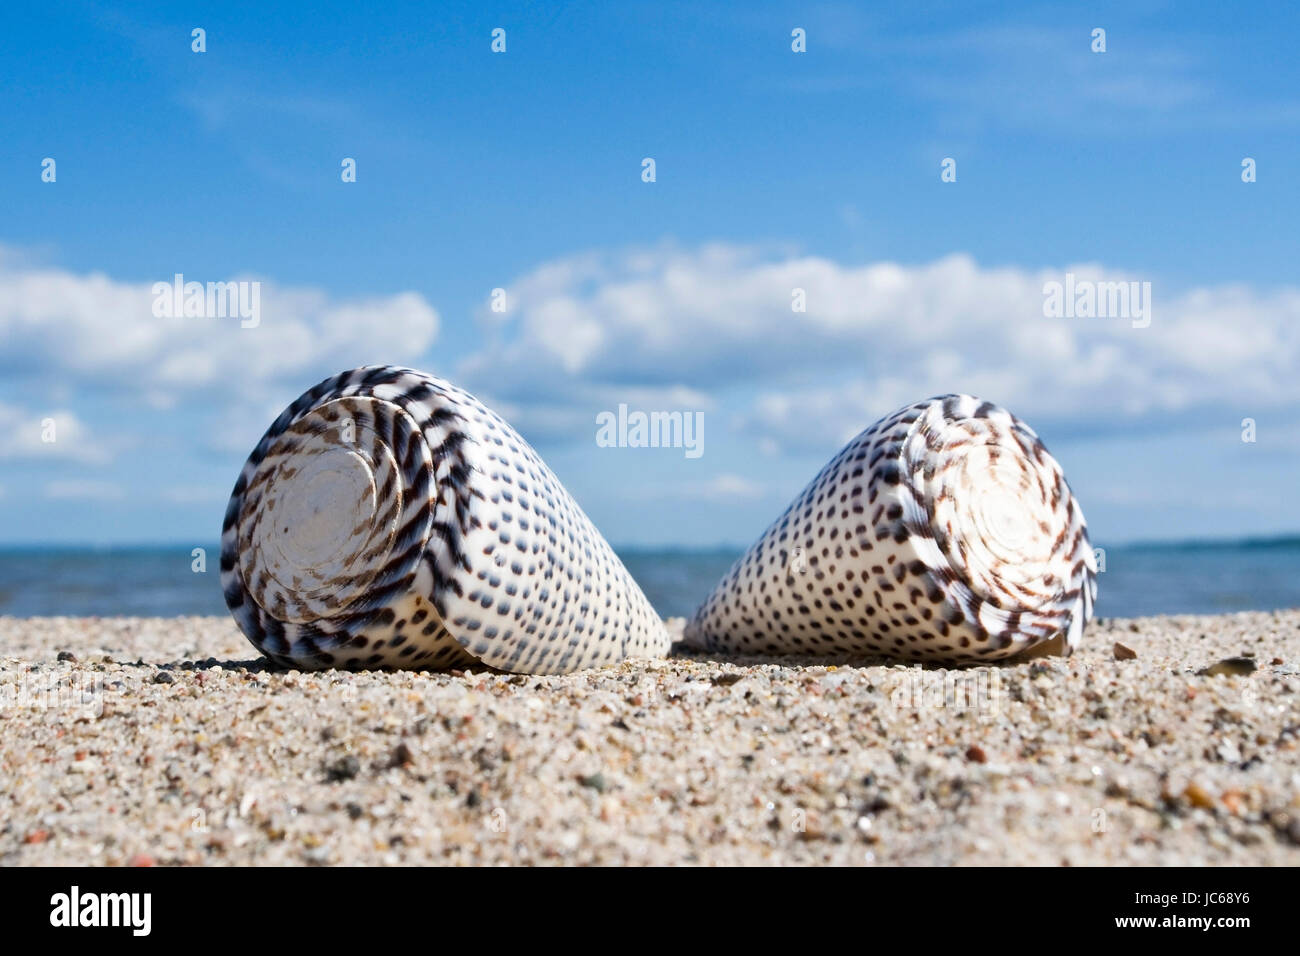 Baltic coast, mussels in the sand, Ostseekueste, Muscheln im Sand Stock Photo